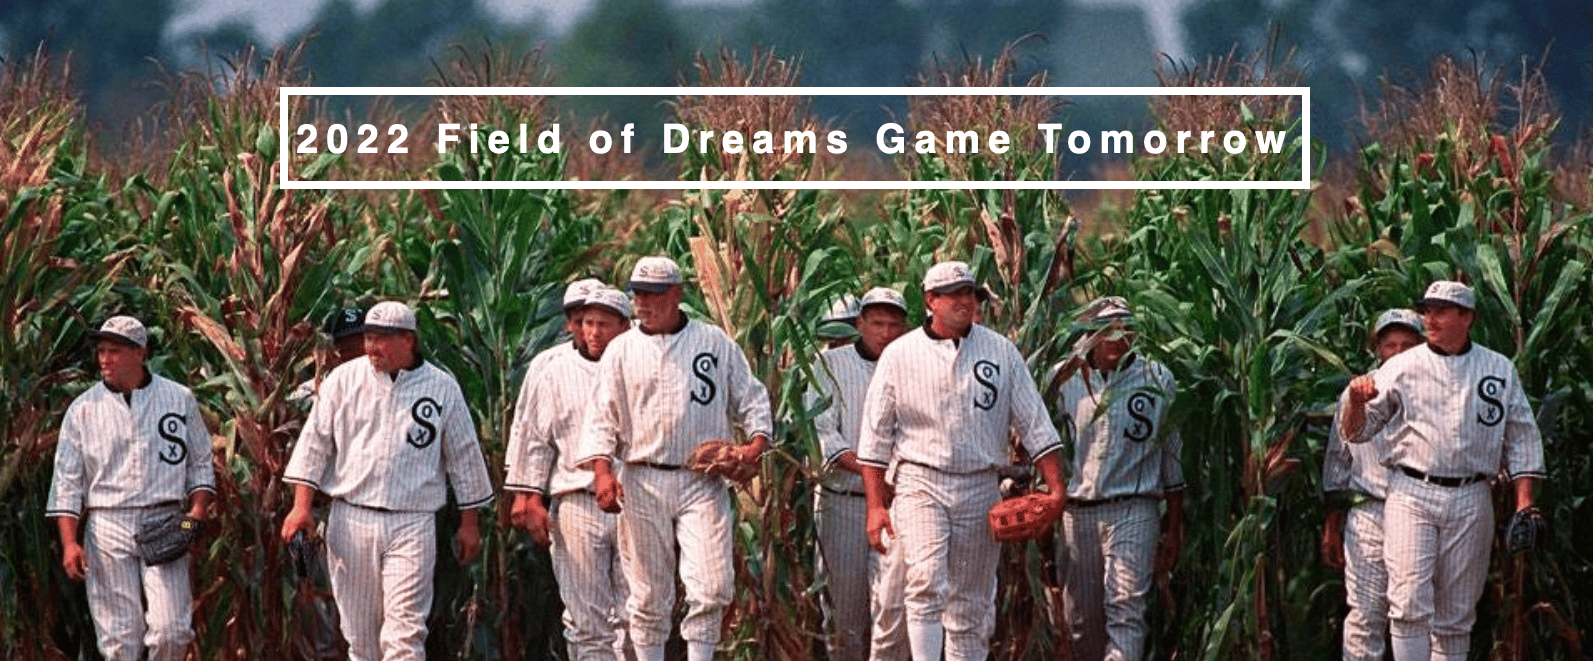 field of dreams game 2022 uniforms